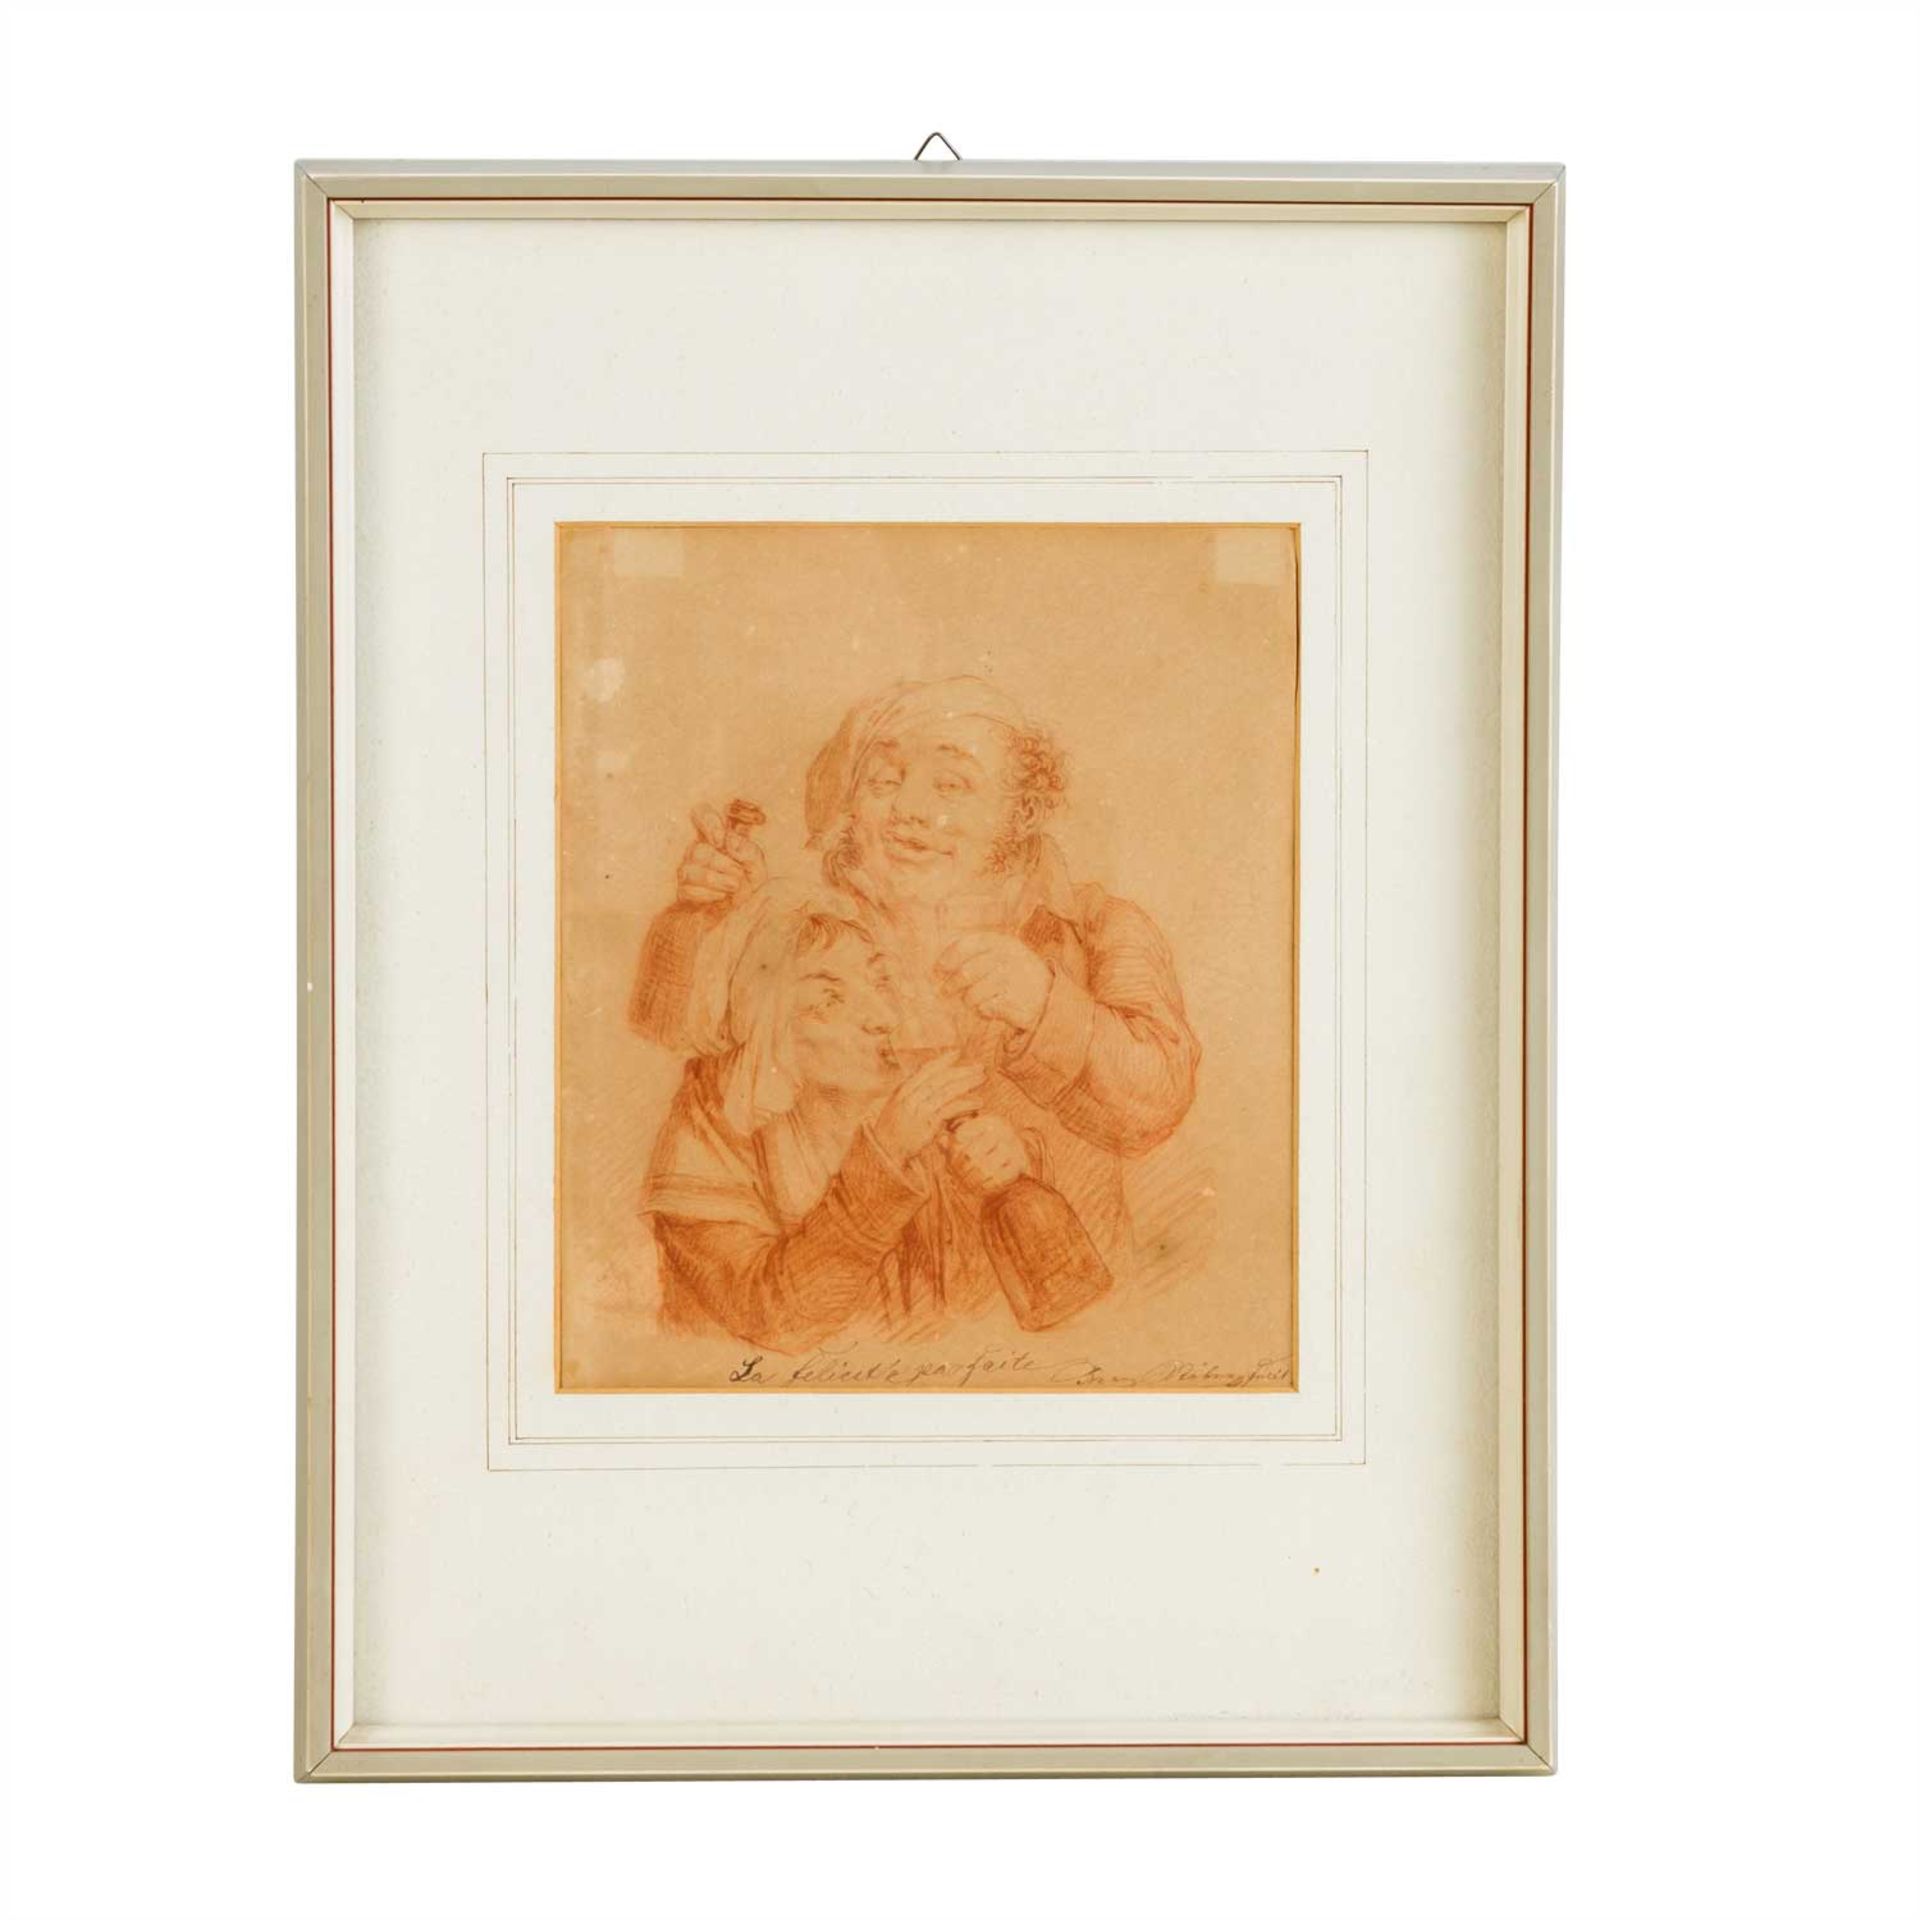 STÖBER, FRANZ XAVER (1795-1858), "La felicitée parfaite", - Image 2 of 4